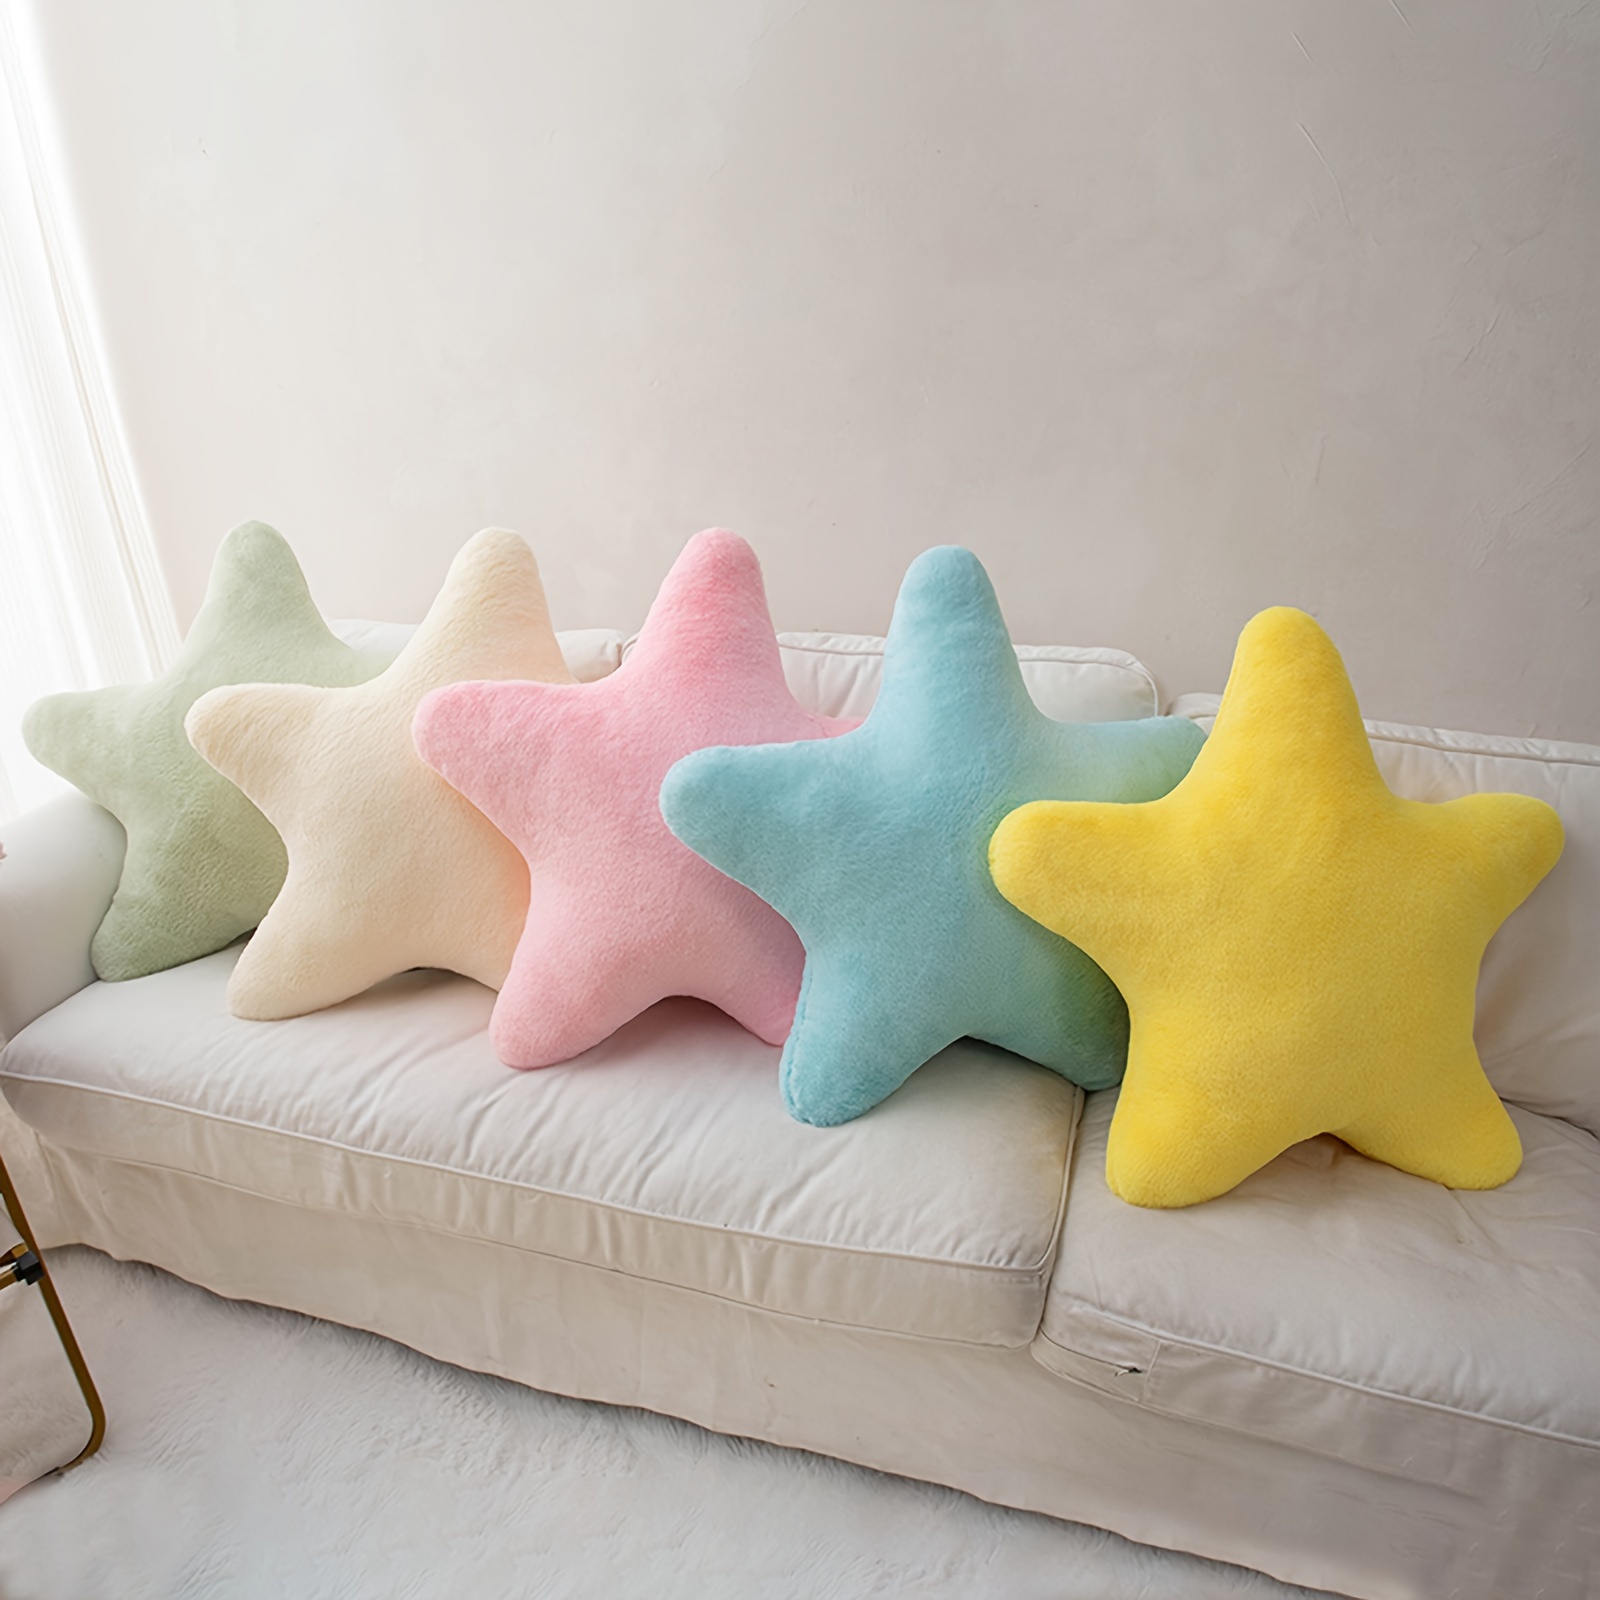 

Star Pillows, Decorative Star Shaped Throw Pillow, Cute Room Decor, Bedroom Home Decor, Plush Star Pillow, 40cm/15.7inch